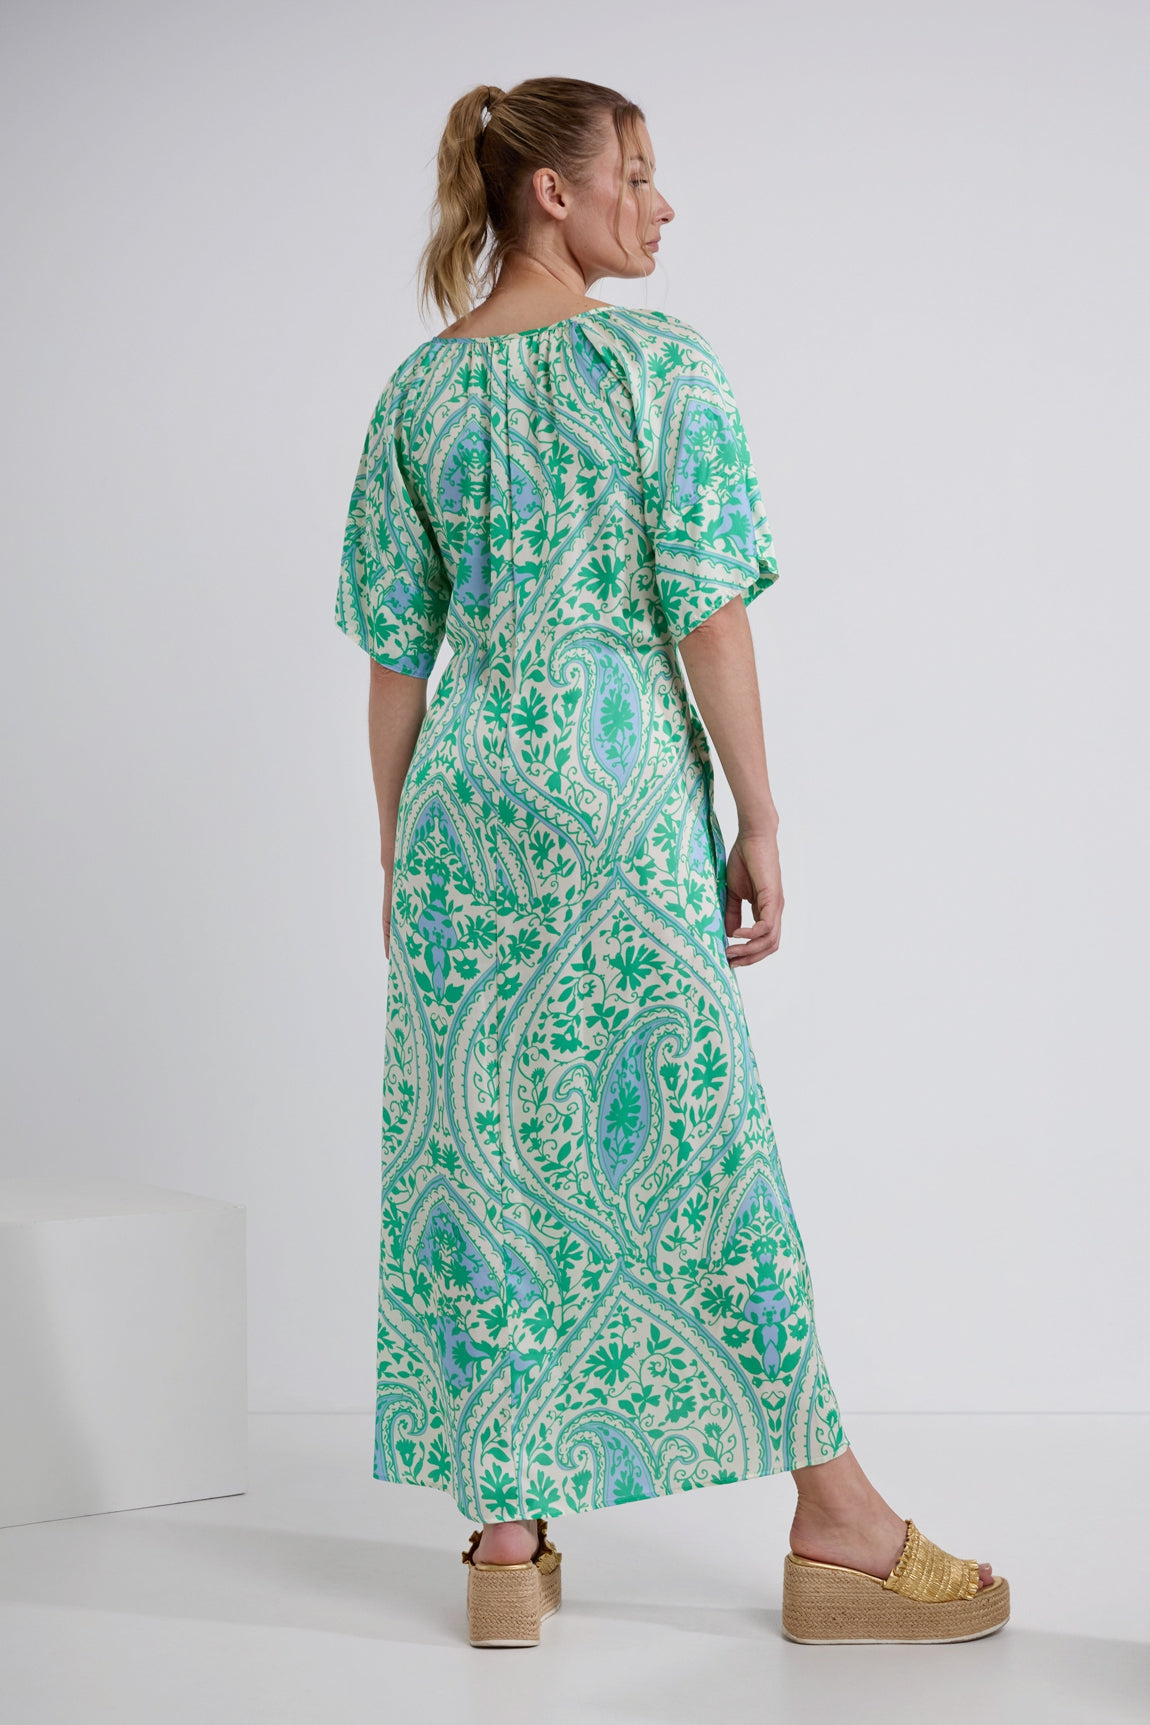 Damaris dress | Parrot Green print